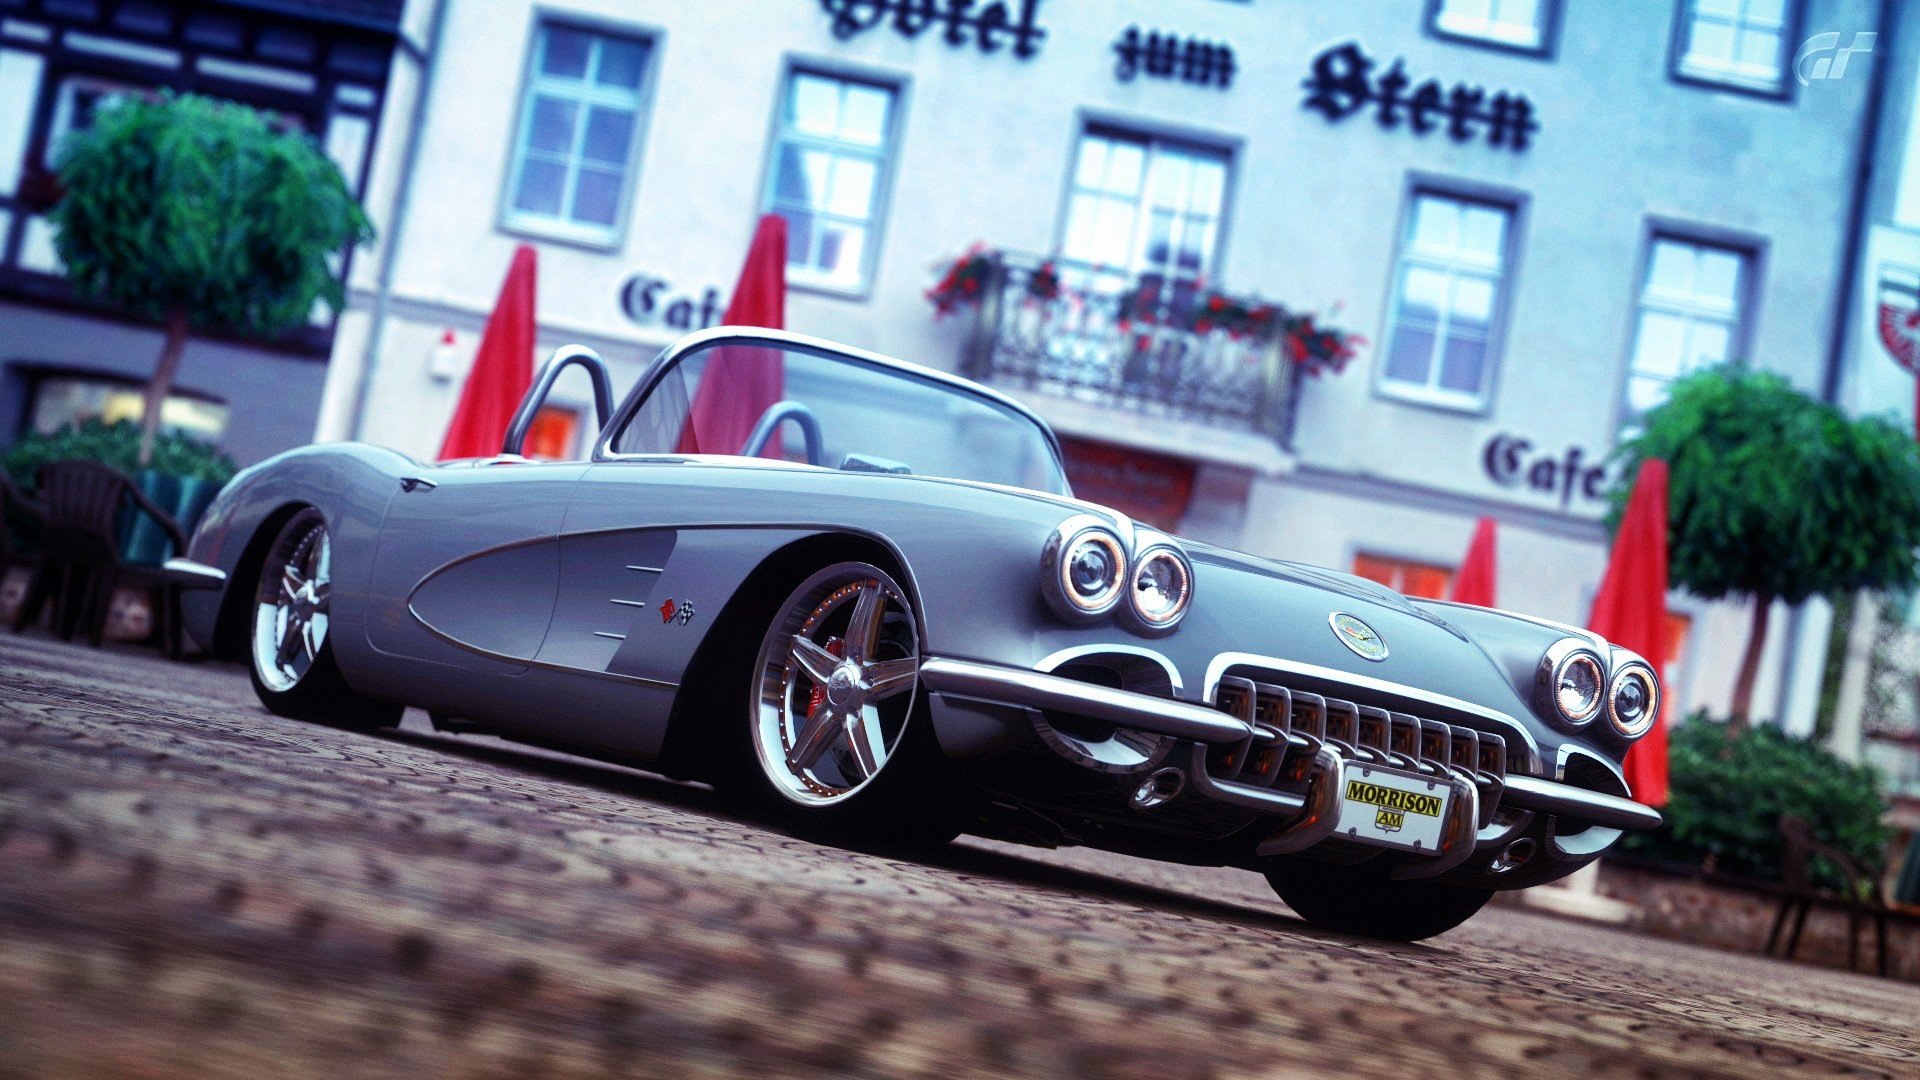 Best Corvette wallpaper ID:54705 for High Resolution 1080p PC